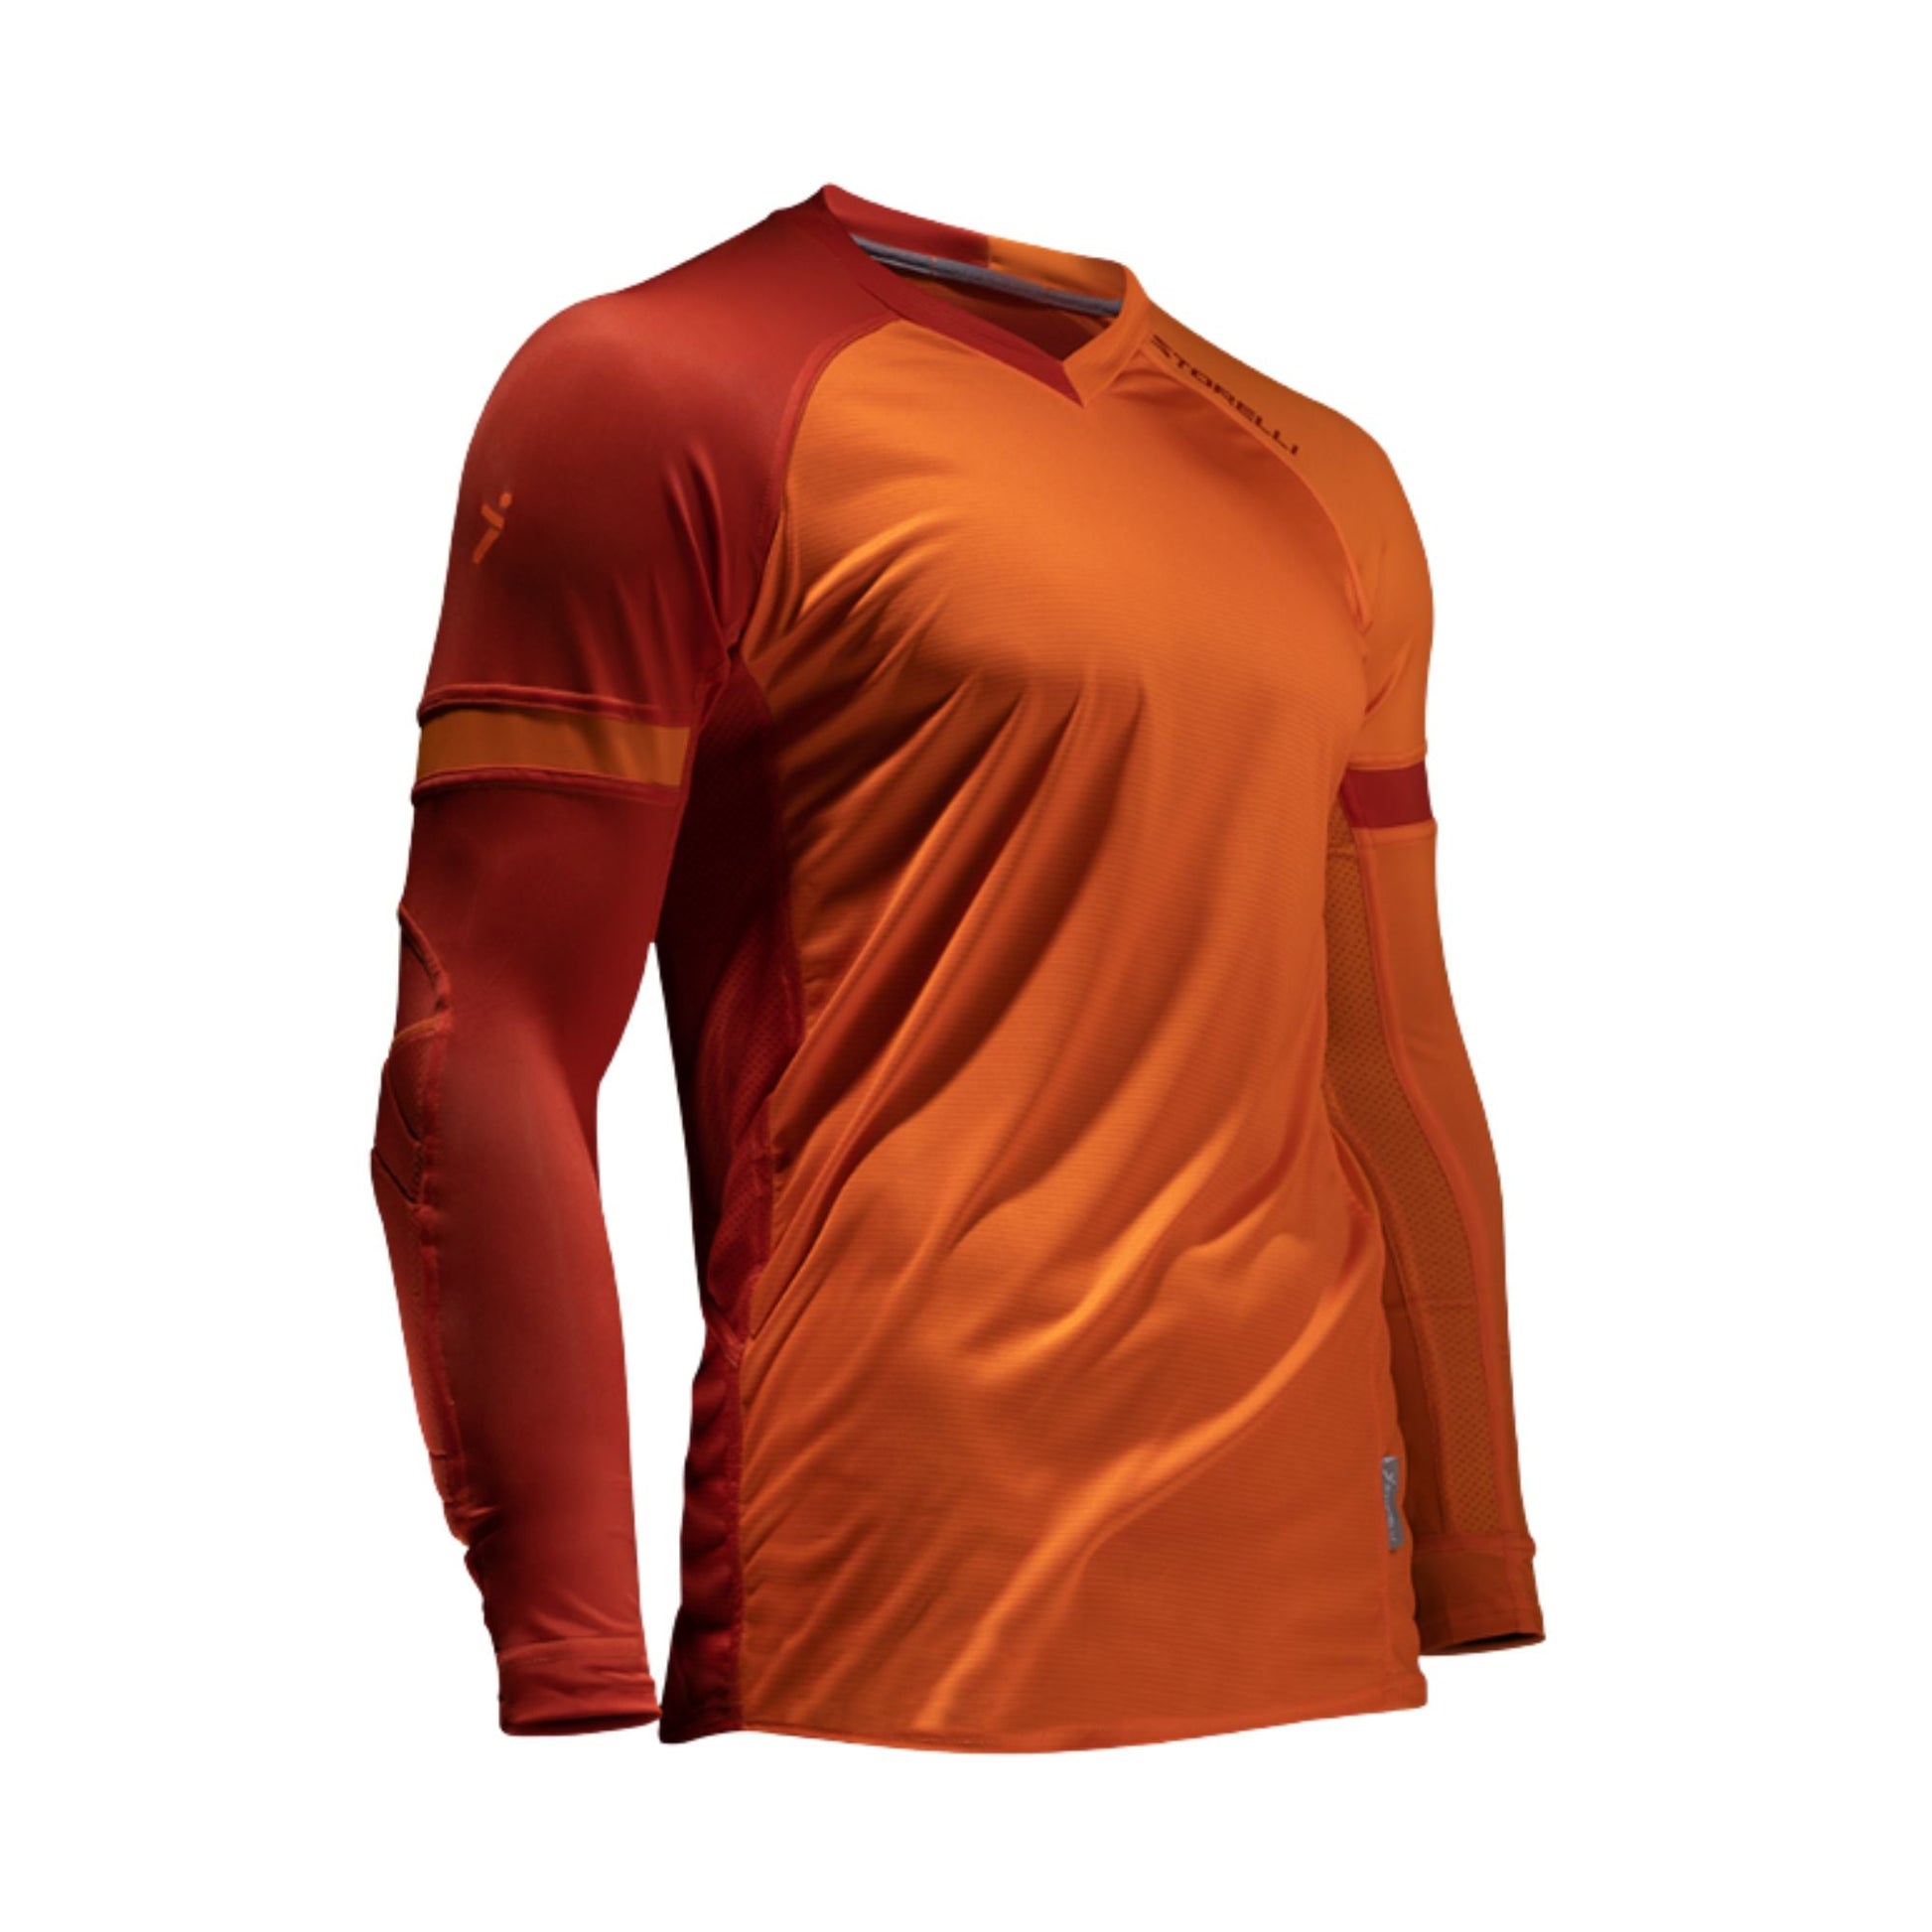 Goalkeeper Jersey by Storelli - Orange Goalkeeper Jersey ITASPORT 